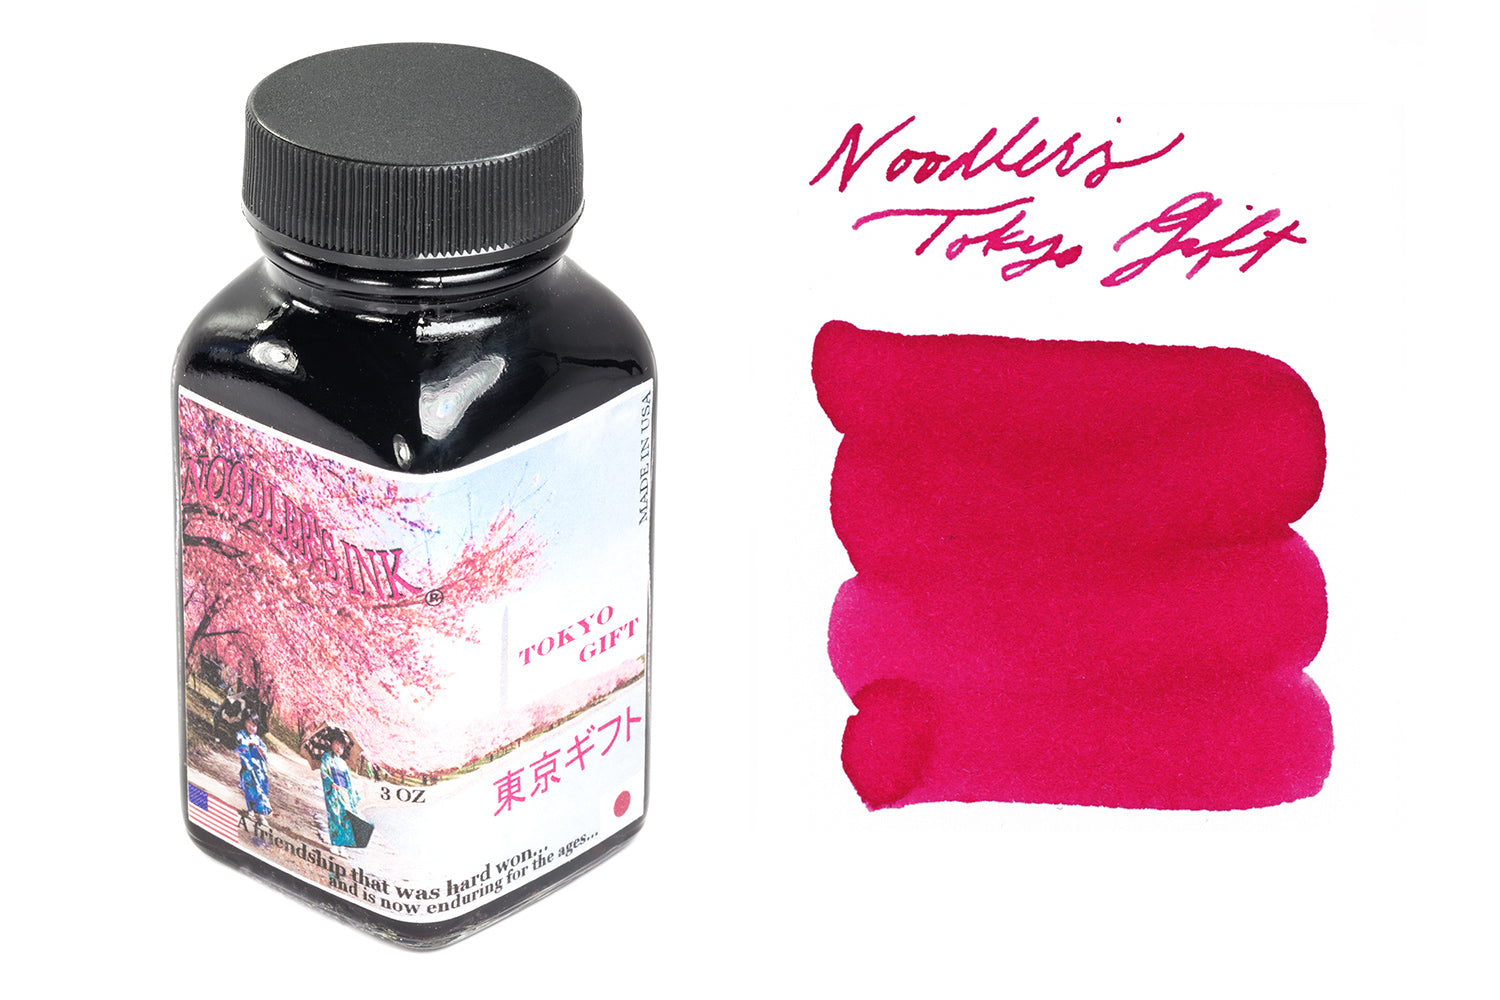 Noodler's Tokyo Gift - 3oz Bottled Fountain Pen Ink - The Goulet Pen Company